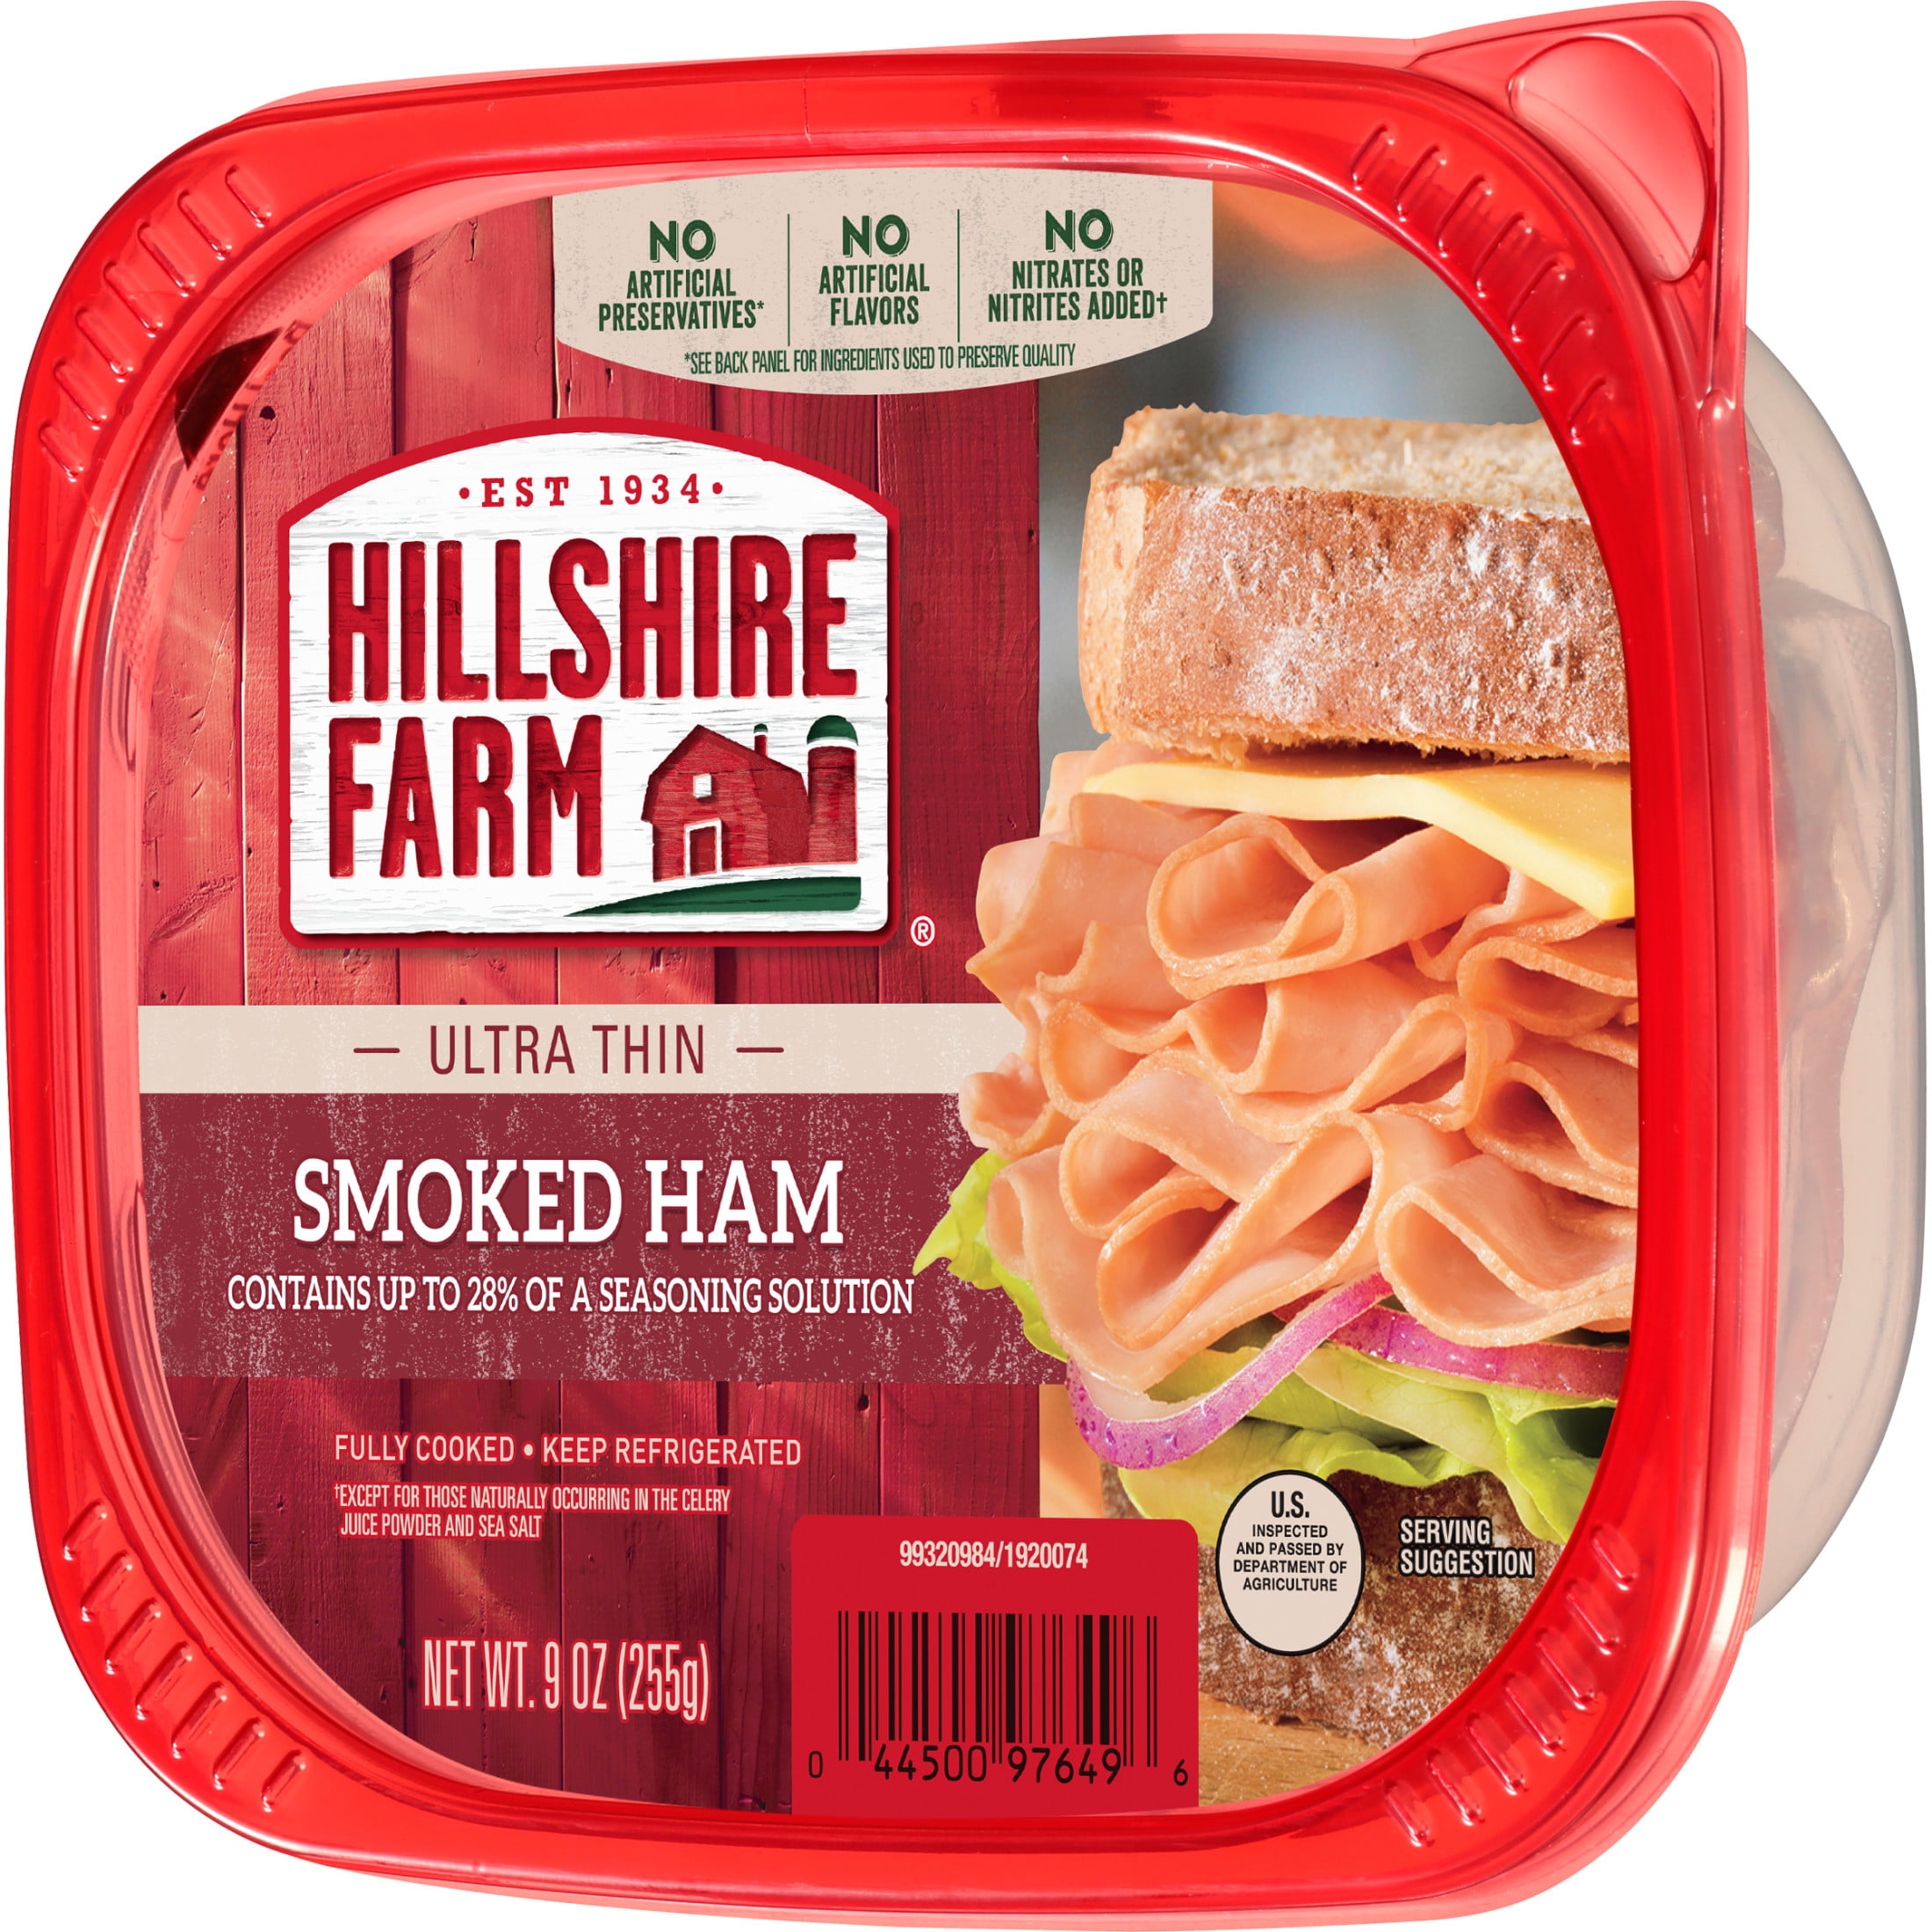 Premium Deli Smoked Ham Lunch Meat, 2 lbs - Foods Co.